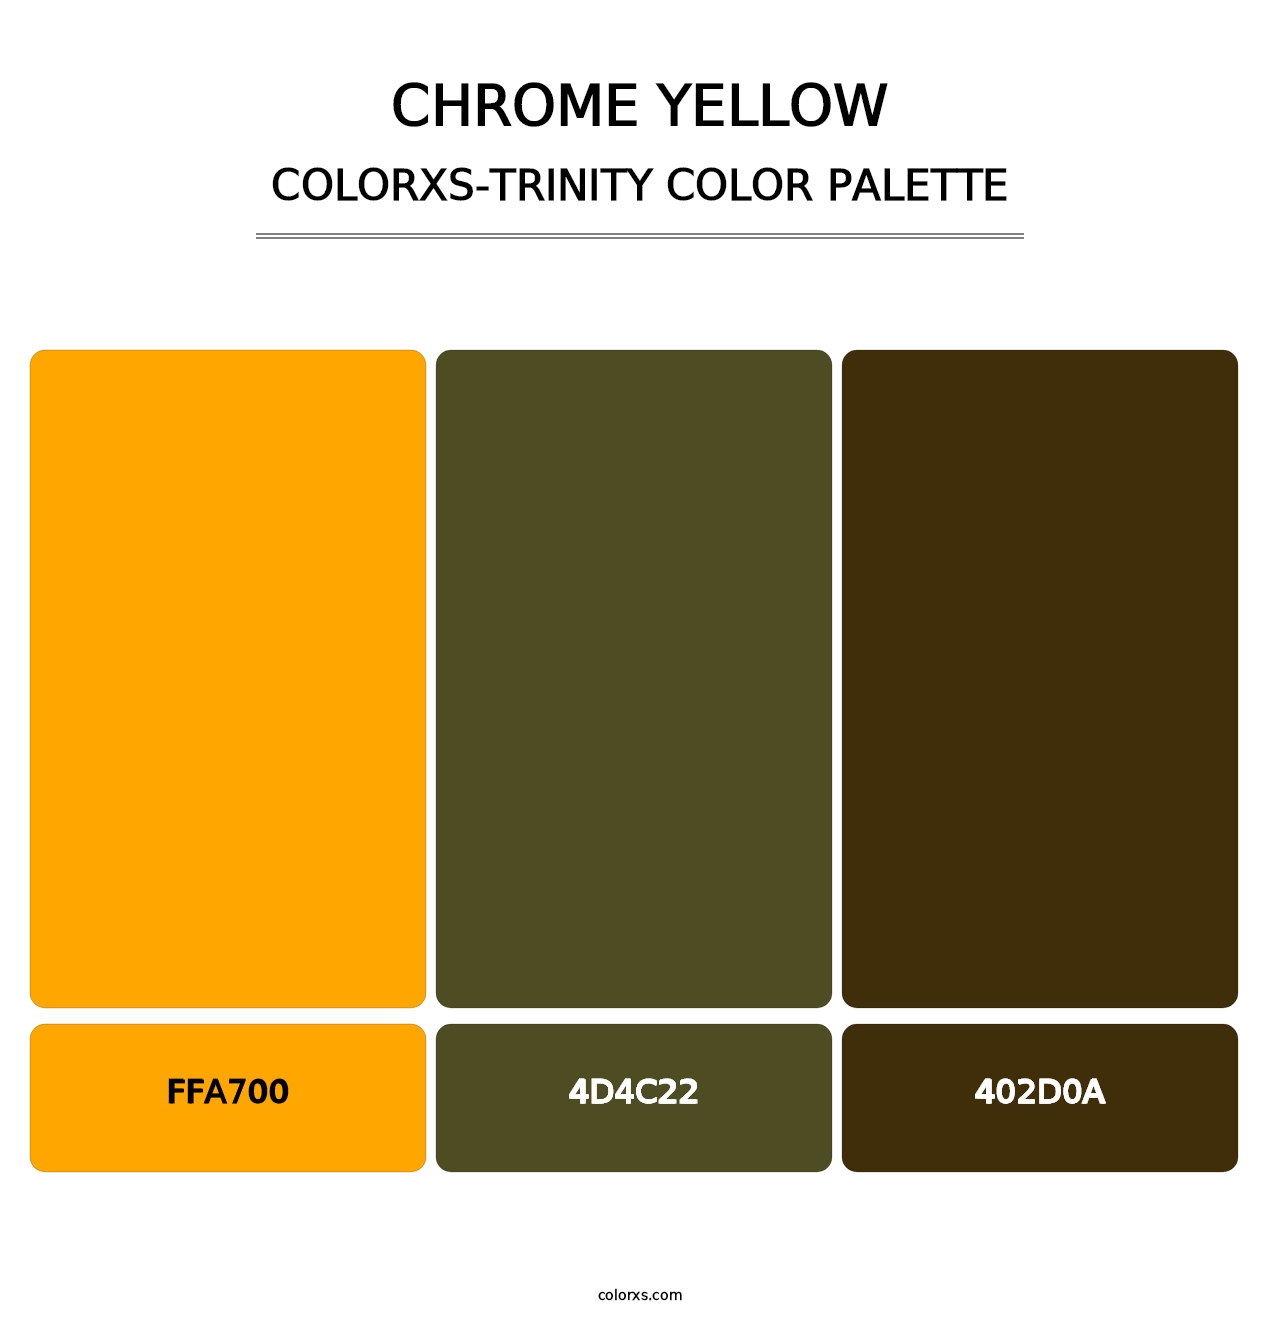 Chrome Yellow - Colorxs Trinity Palette